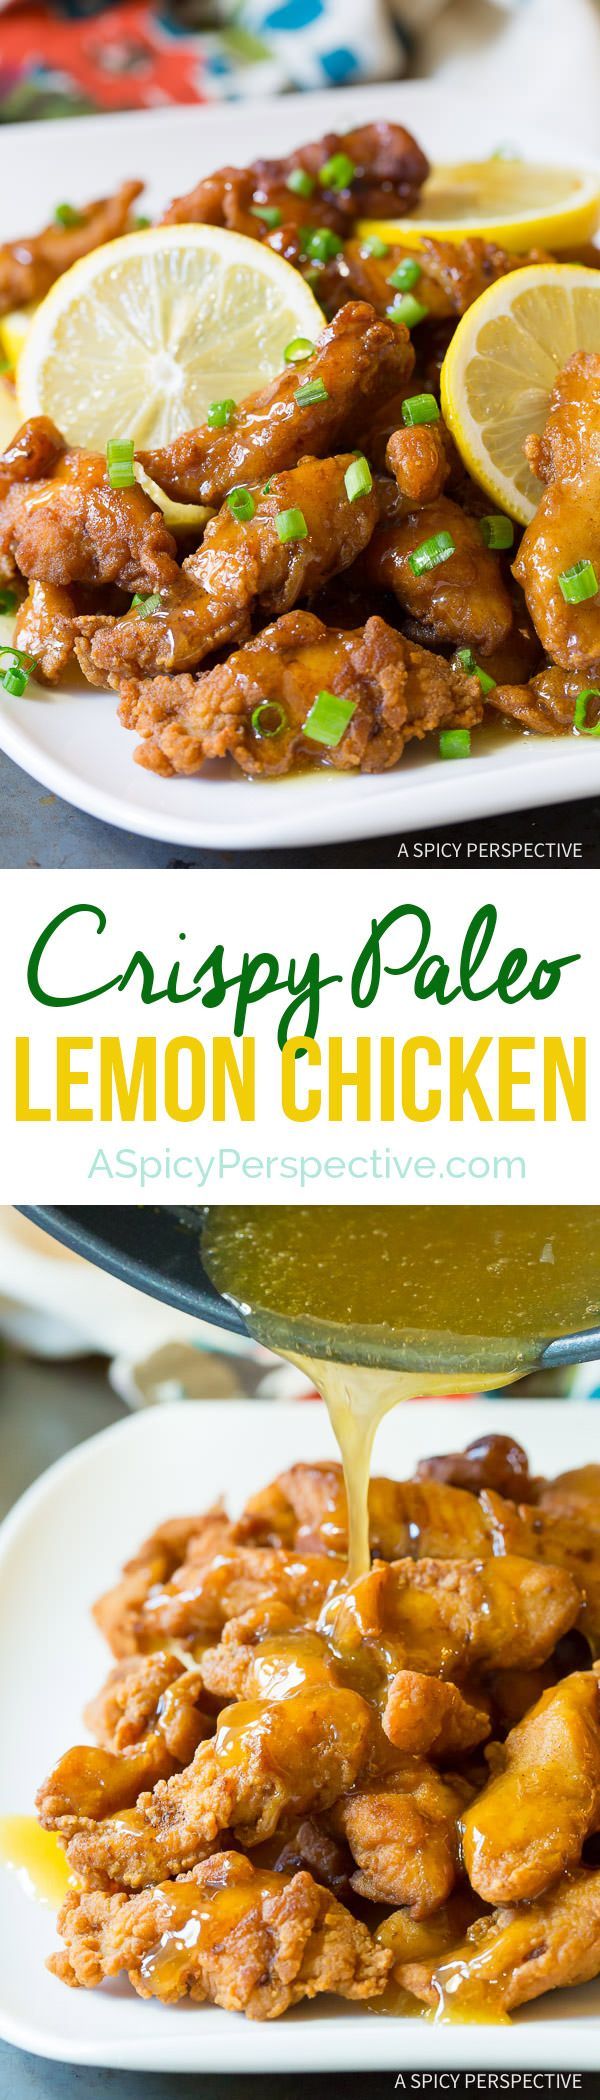 Crazy over this Lightened-Up Chinese Lemon Chicken Recipe (Paleo & Gluten Free!) | ASpicyPerspective.com